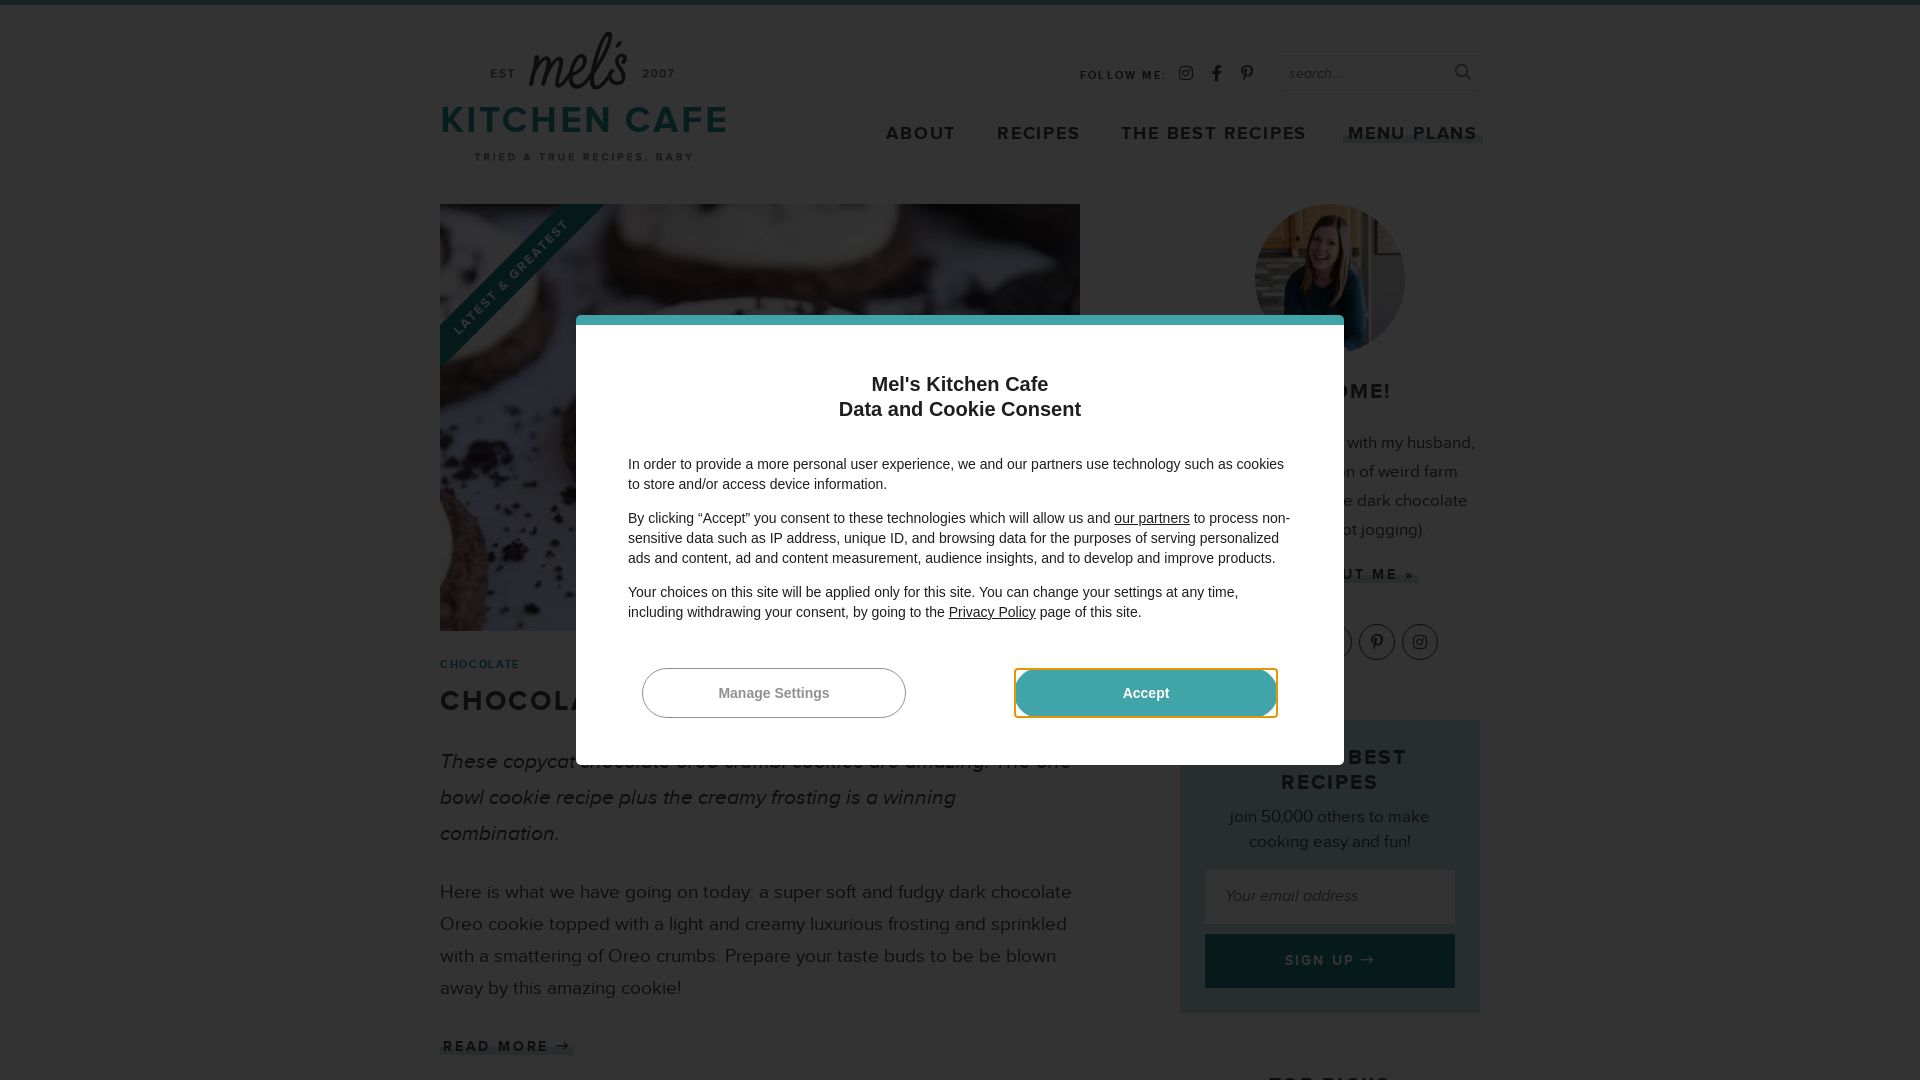 Website status melskitchencafe.com is   ONLINE